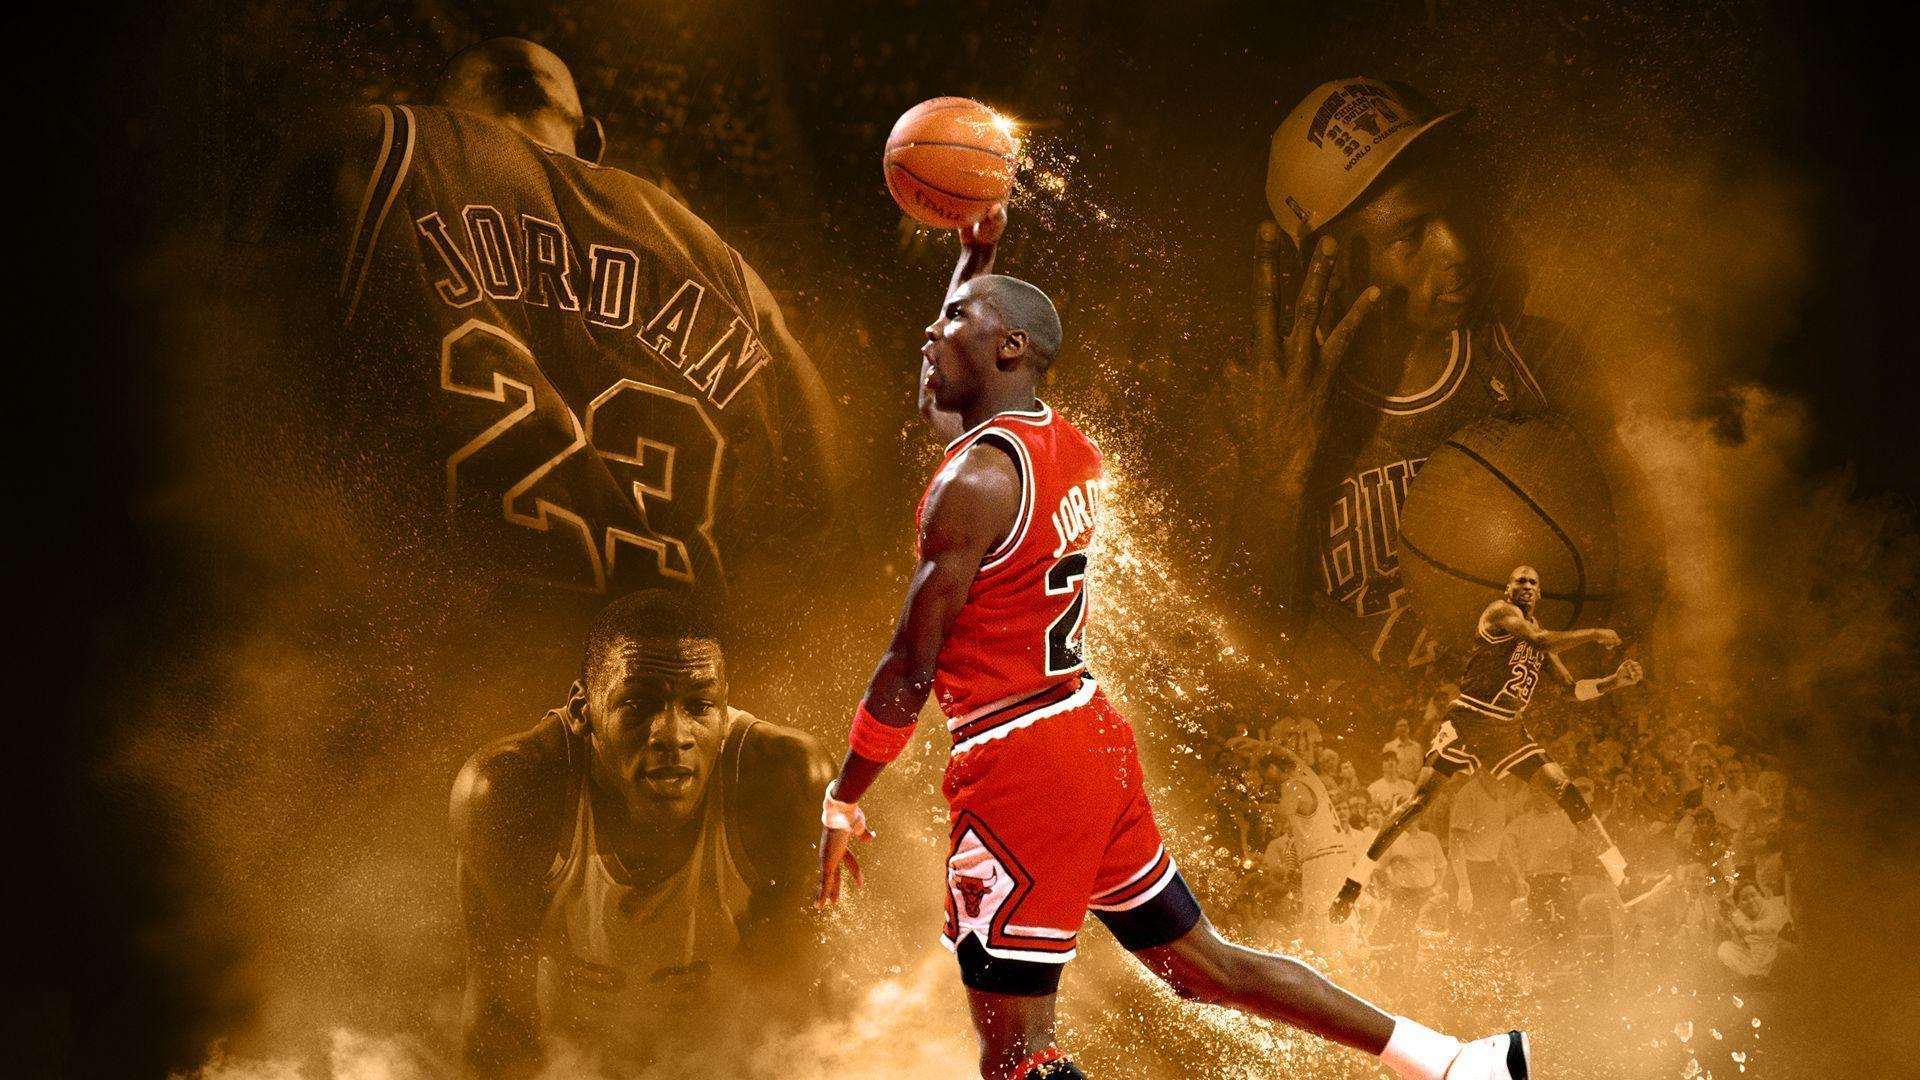 Basketball NBA Wallpaper. Wallpaper, Background, Image, Art